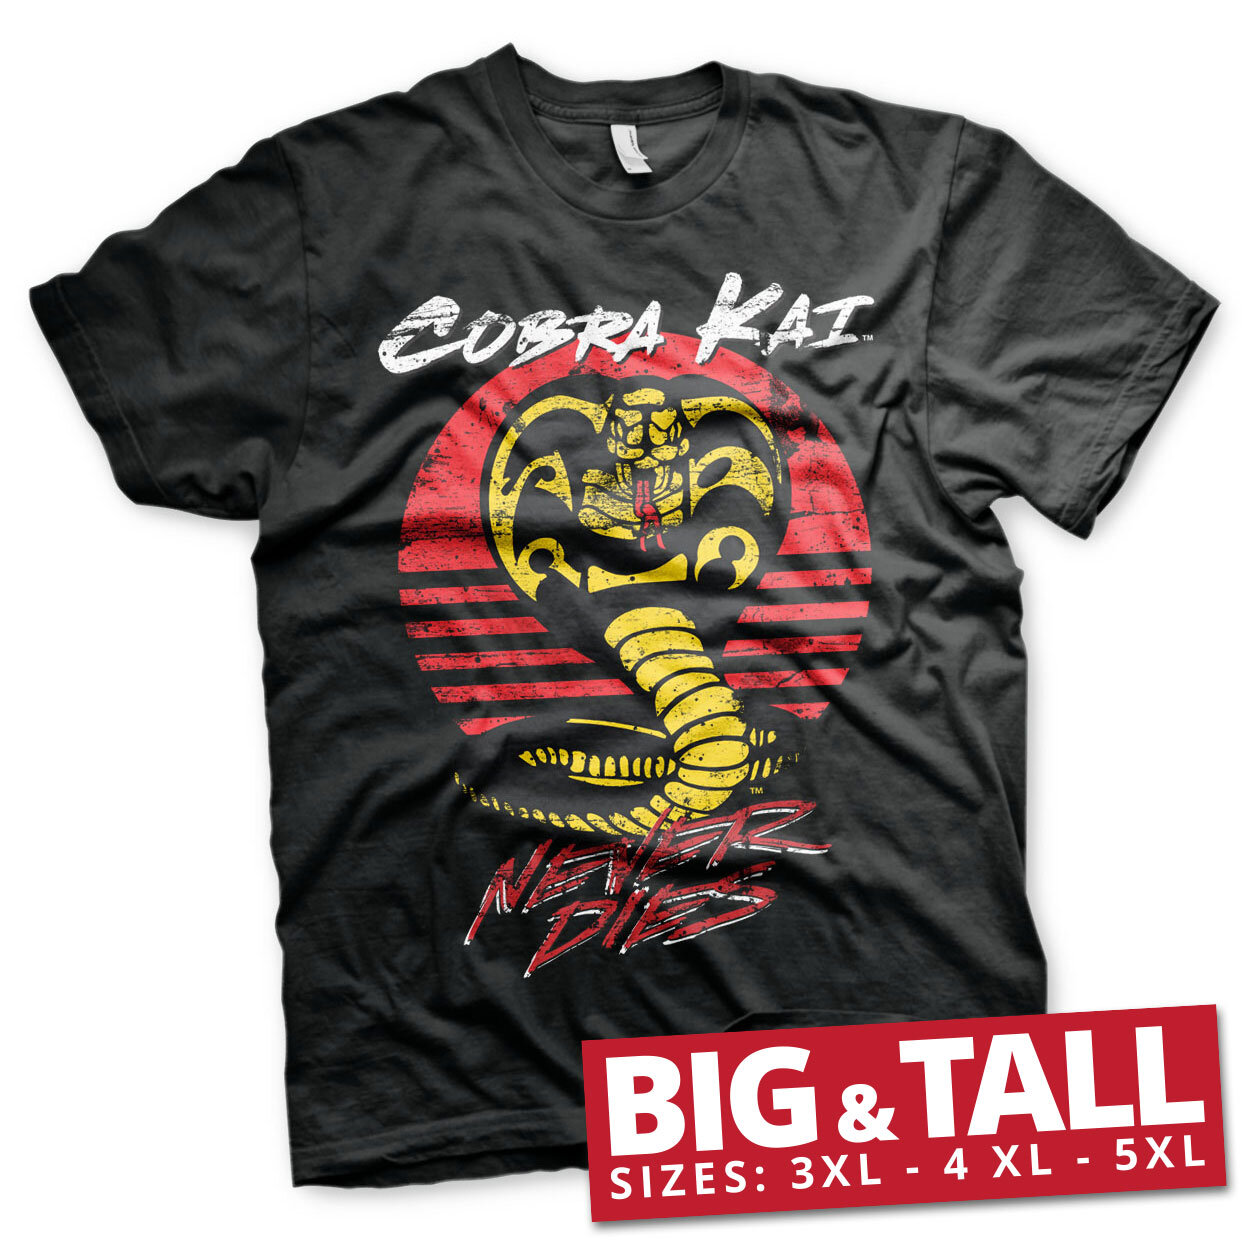 Cobra Kai Never Dies Big & Tall T-Shirt